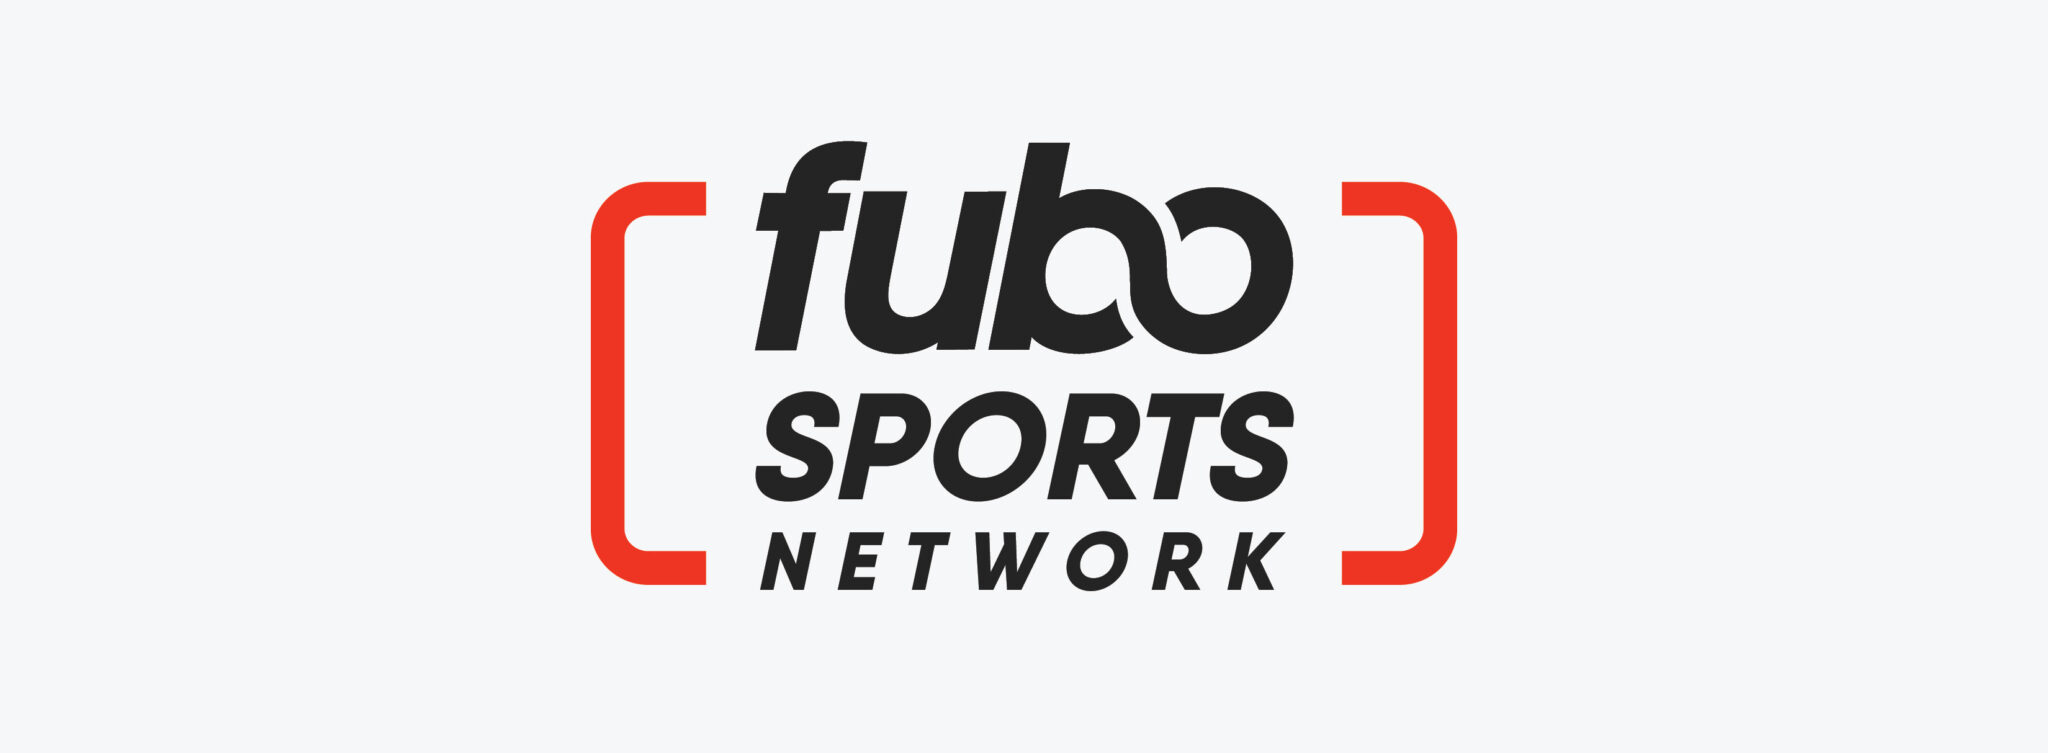 fubo-sports-network-logo-light